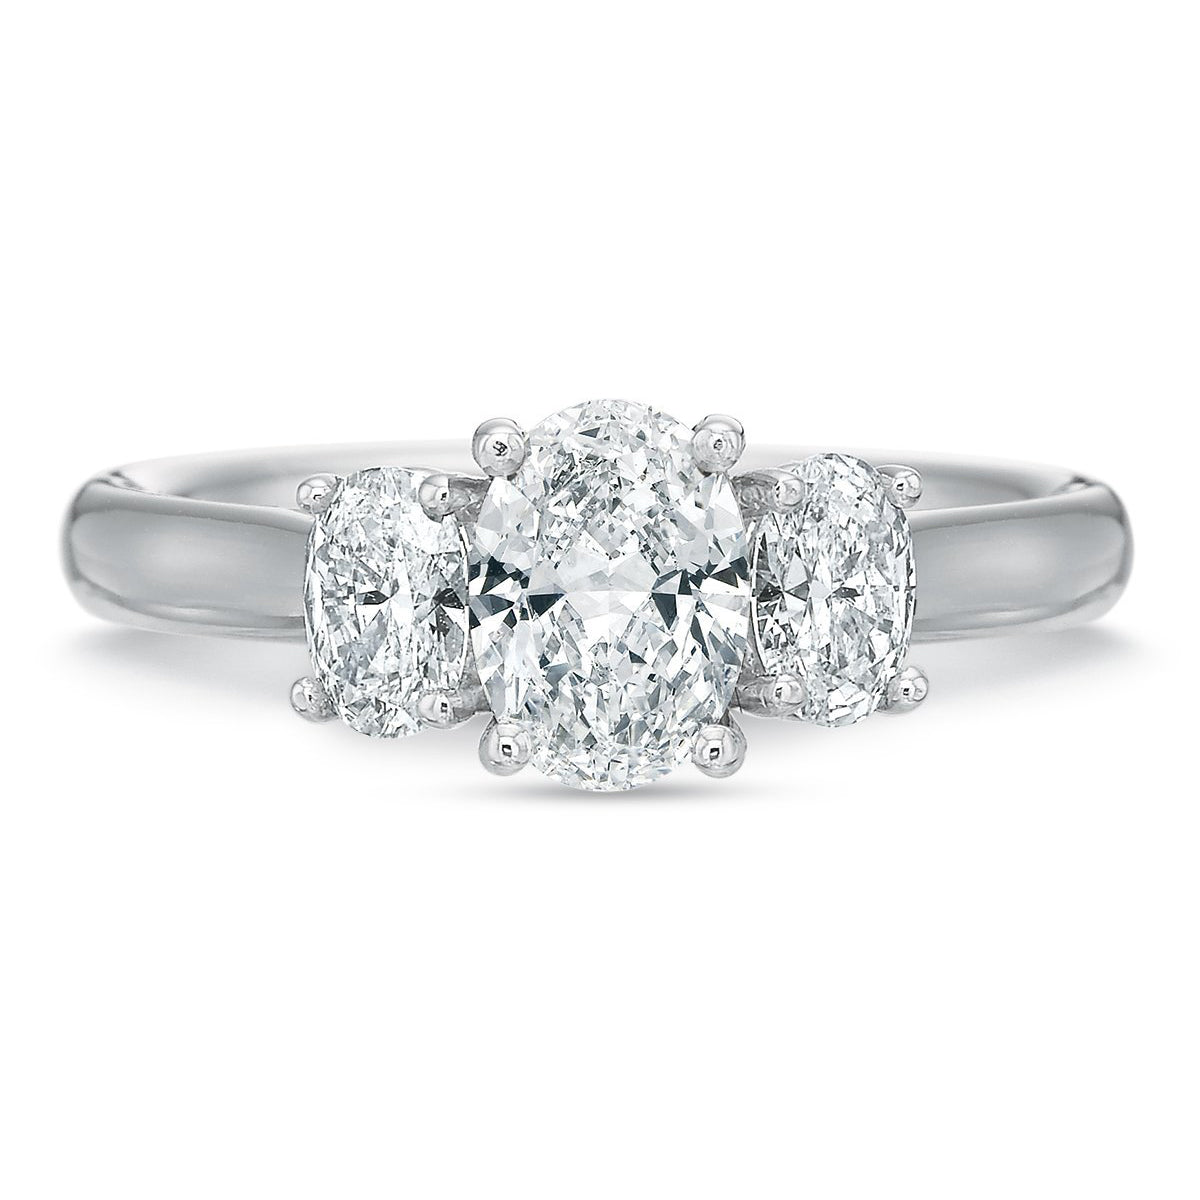 Korman Signature 18kt 3-stone 1.5ct Center Oval Diamond Engagement Ring